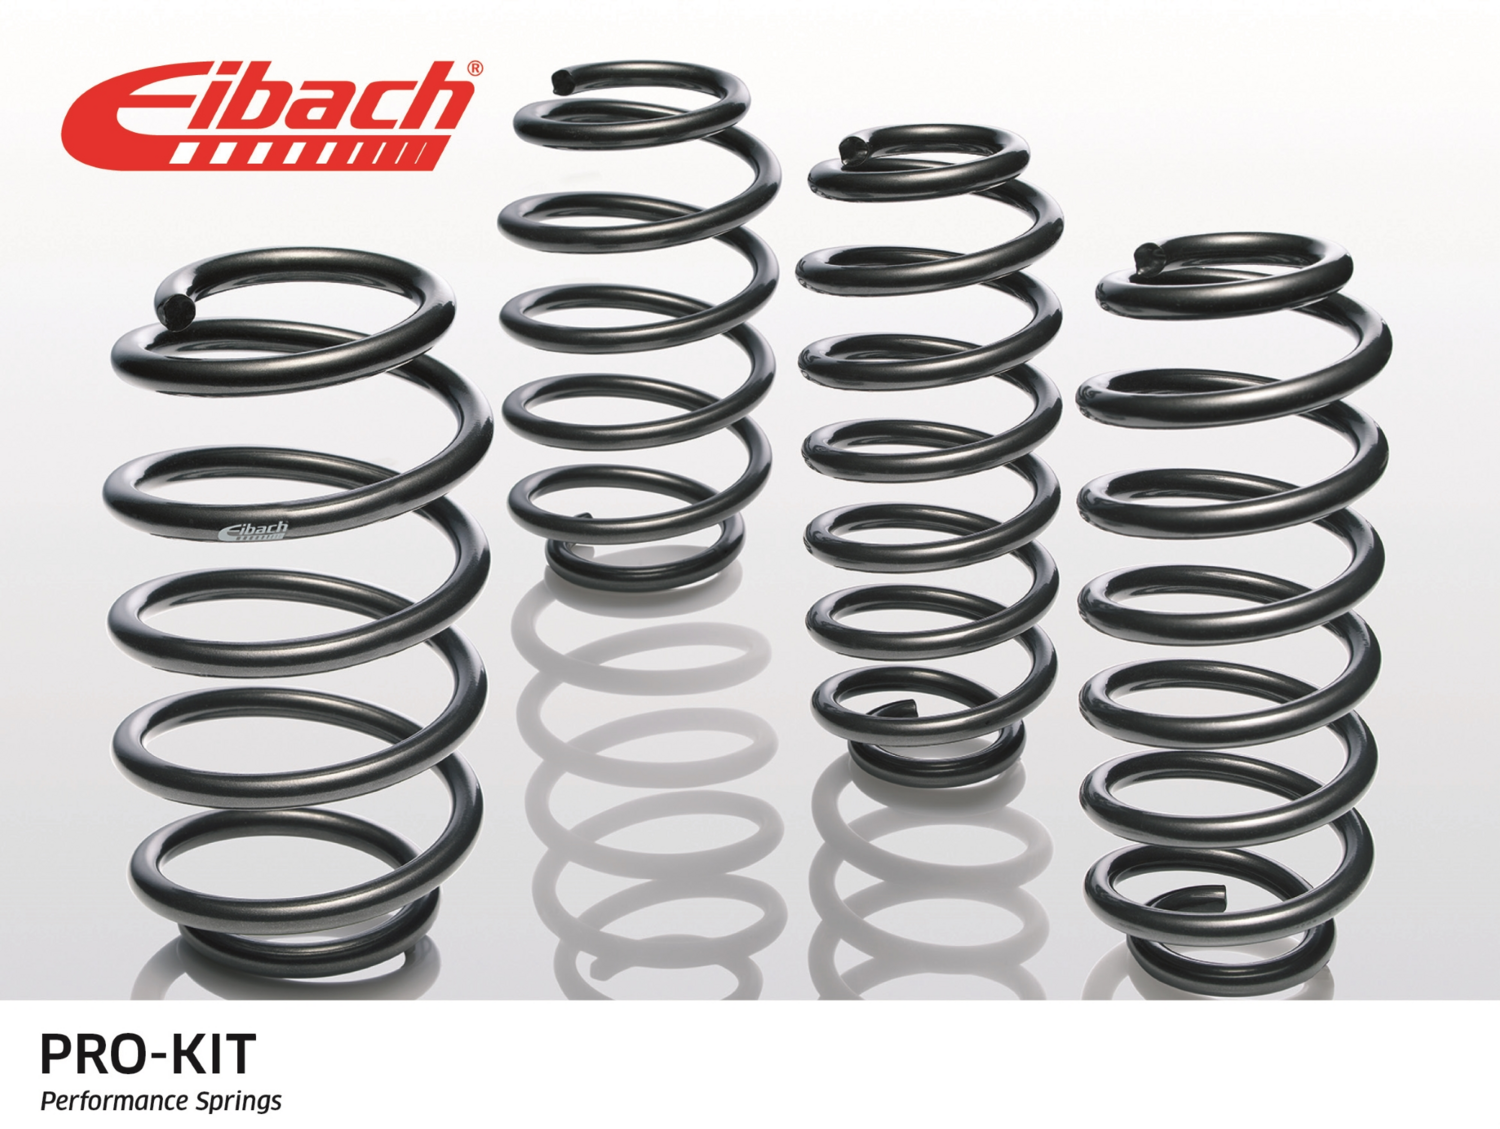 Mazda 3 BL Diesel (& 2ltr Petrol) - Eibach Pro-Kit Lowering Spring Kit